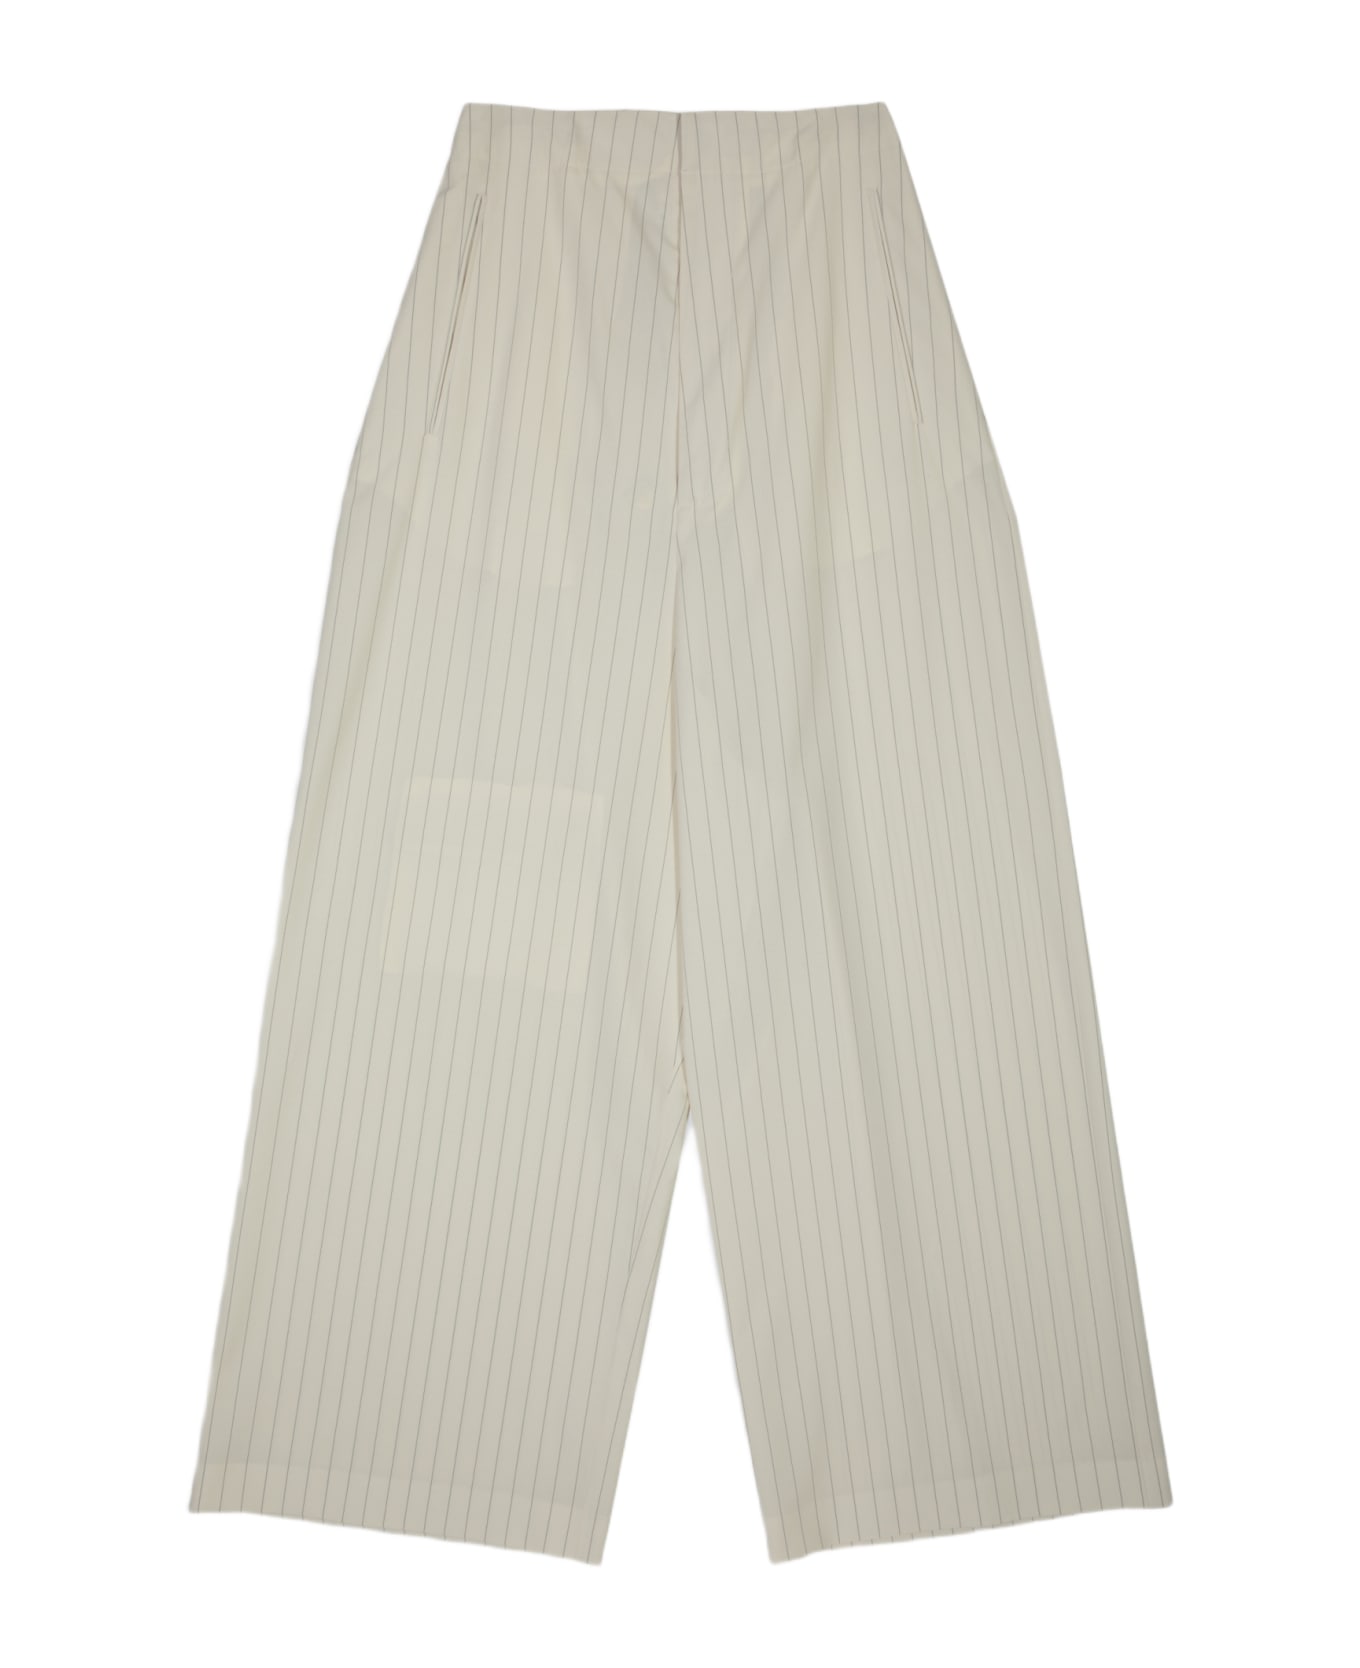 MM6 Maison Margiela Pantalone Off white pinstriped baggy tailored pant - Panna